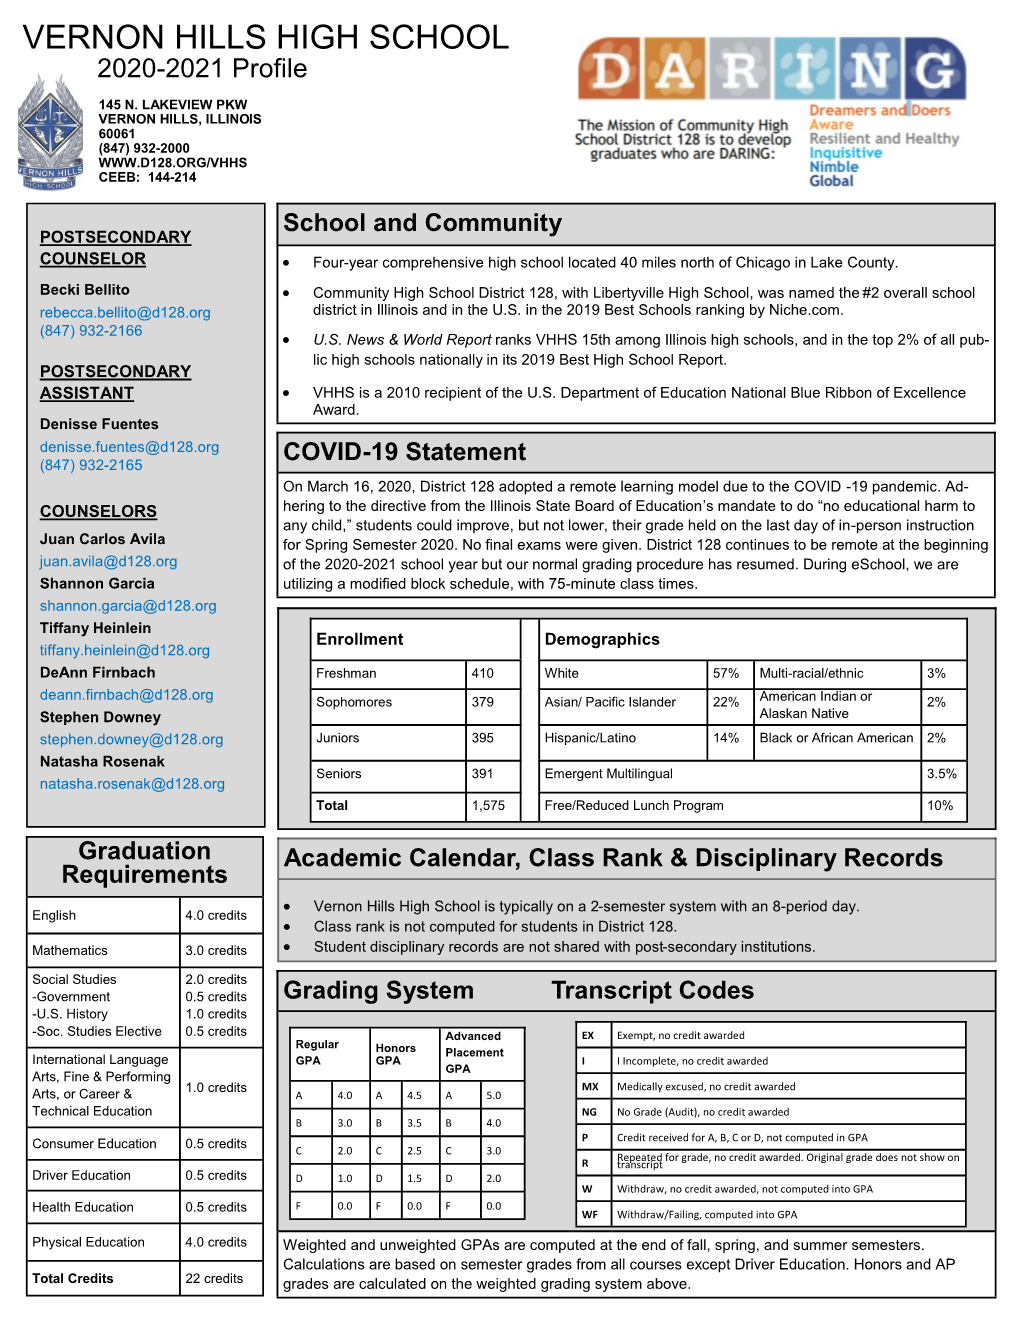 VHHS School Profile 2020-2021